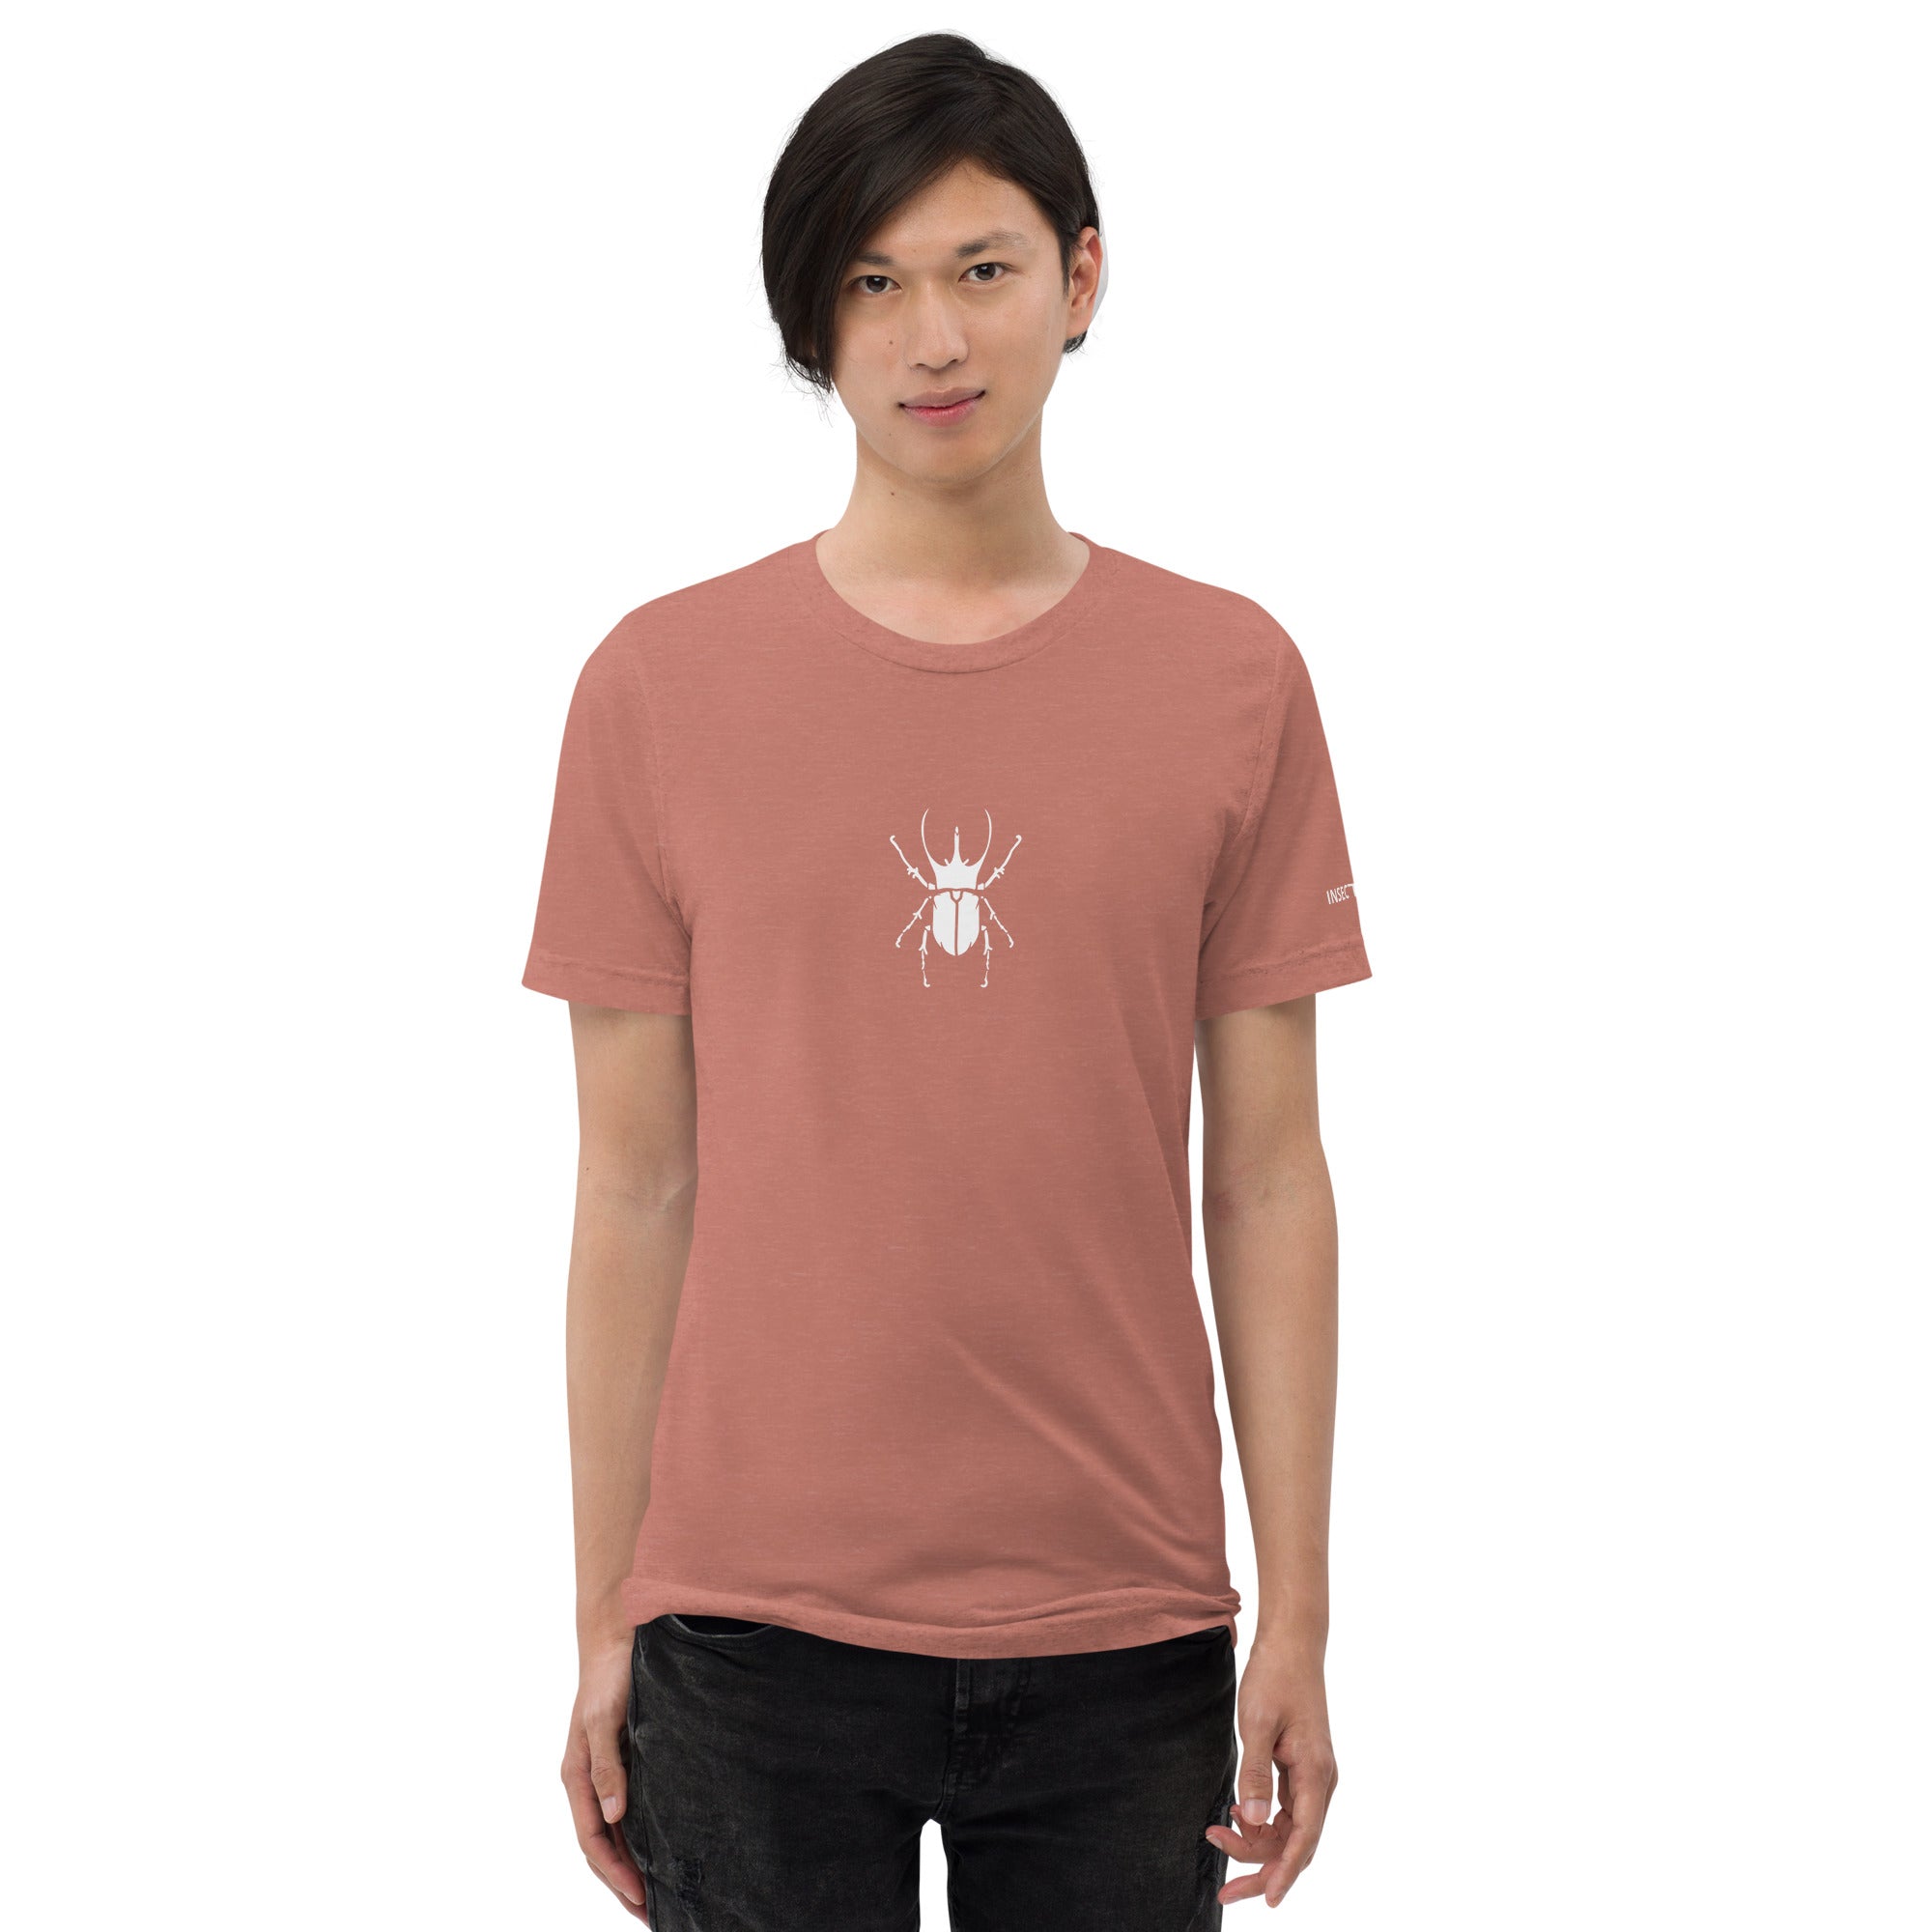 Beetle Short sleeve t-shirt